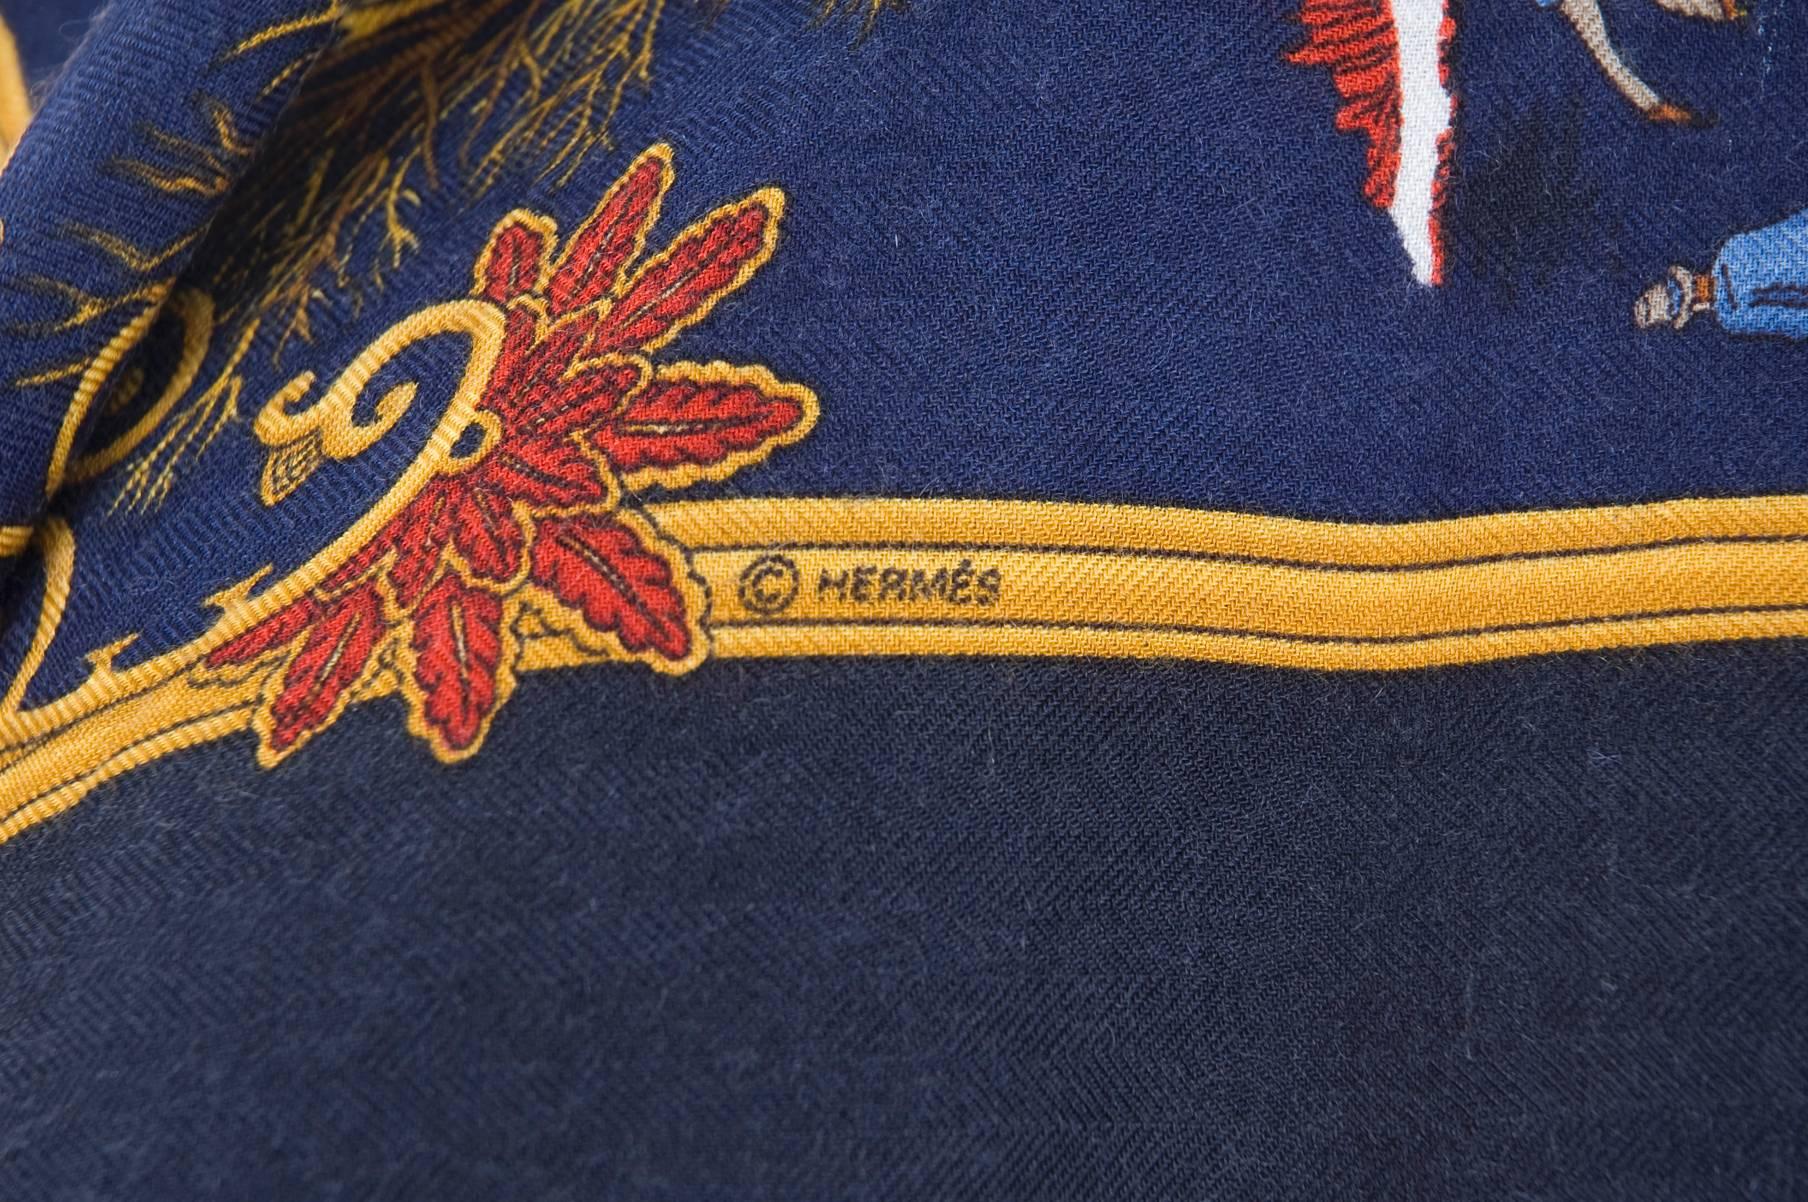 Rare Vintage Hermes Scarf Joies D'Hiver Navy Border Cashmere/Silk  In Excellent Condition For Sale In Hamburg, Deutschland